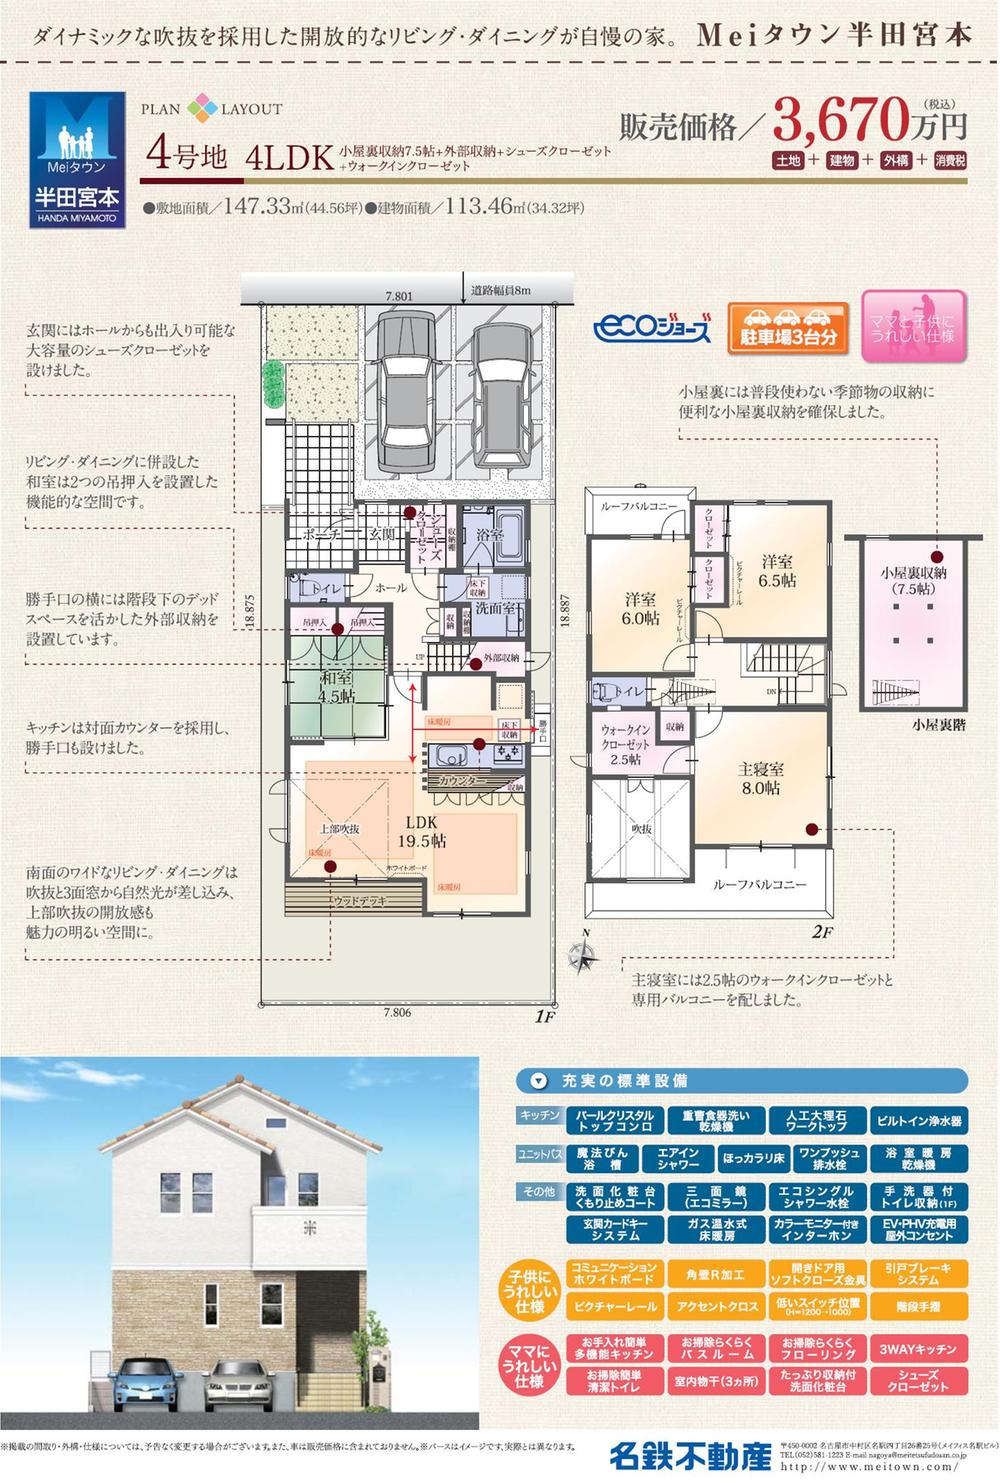 Floor plan. (No. 4 locations), Price 36,700,000 yen, 4LDK, Land area 147.33 sq m , Building area 113.46 sq m